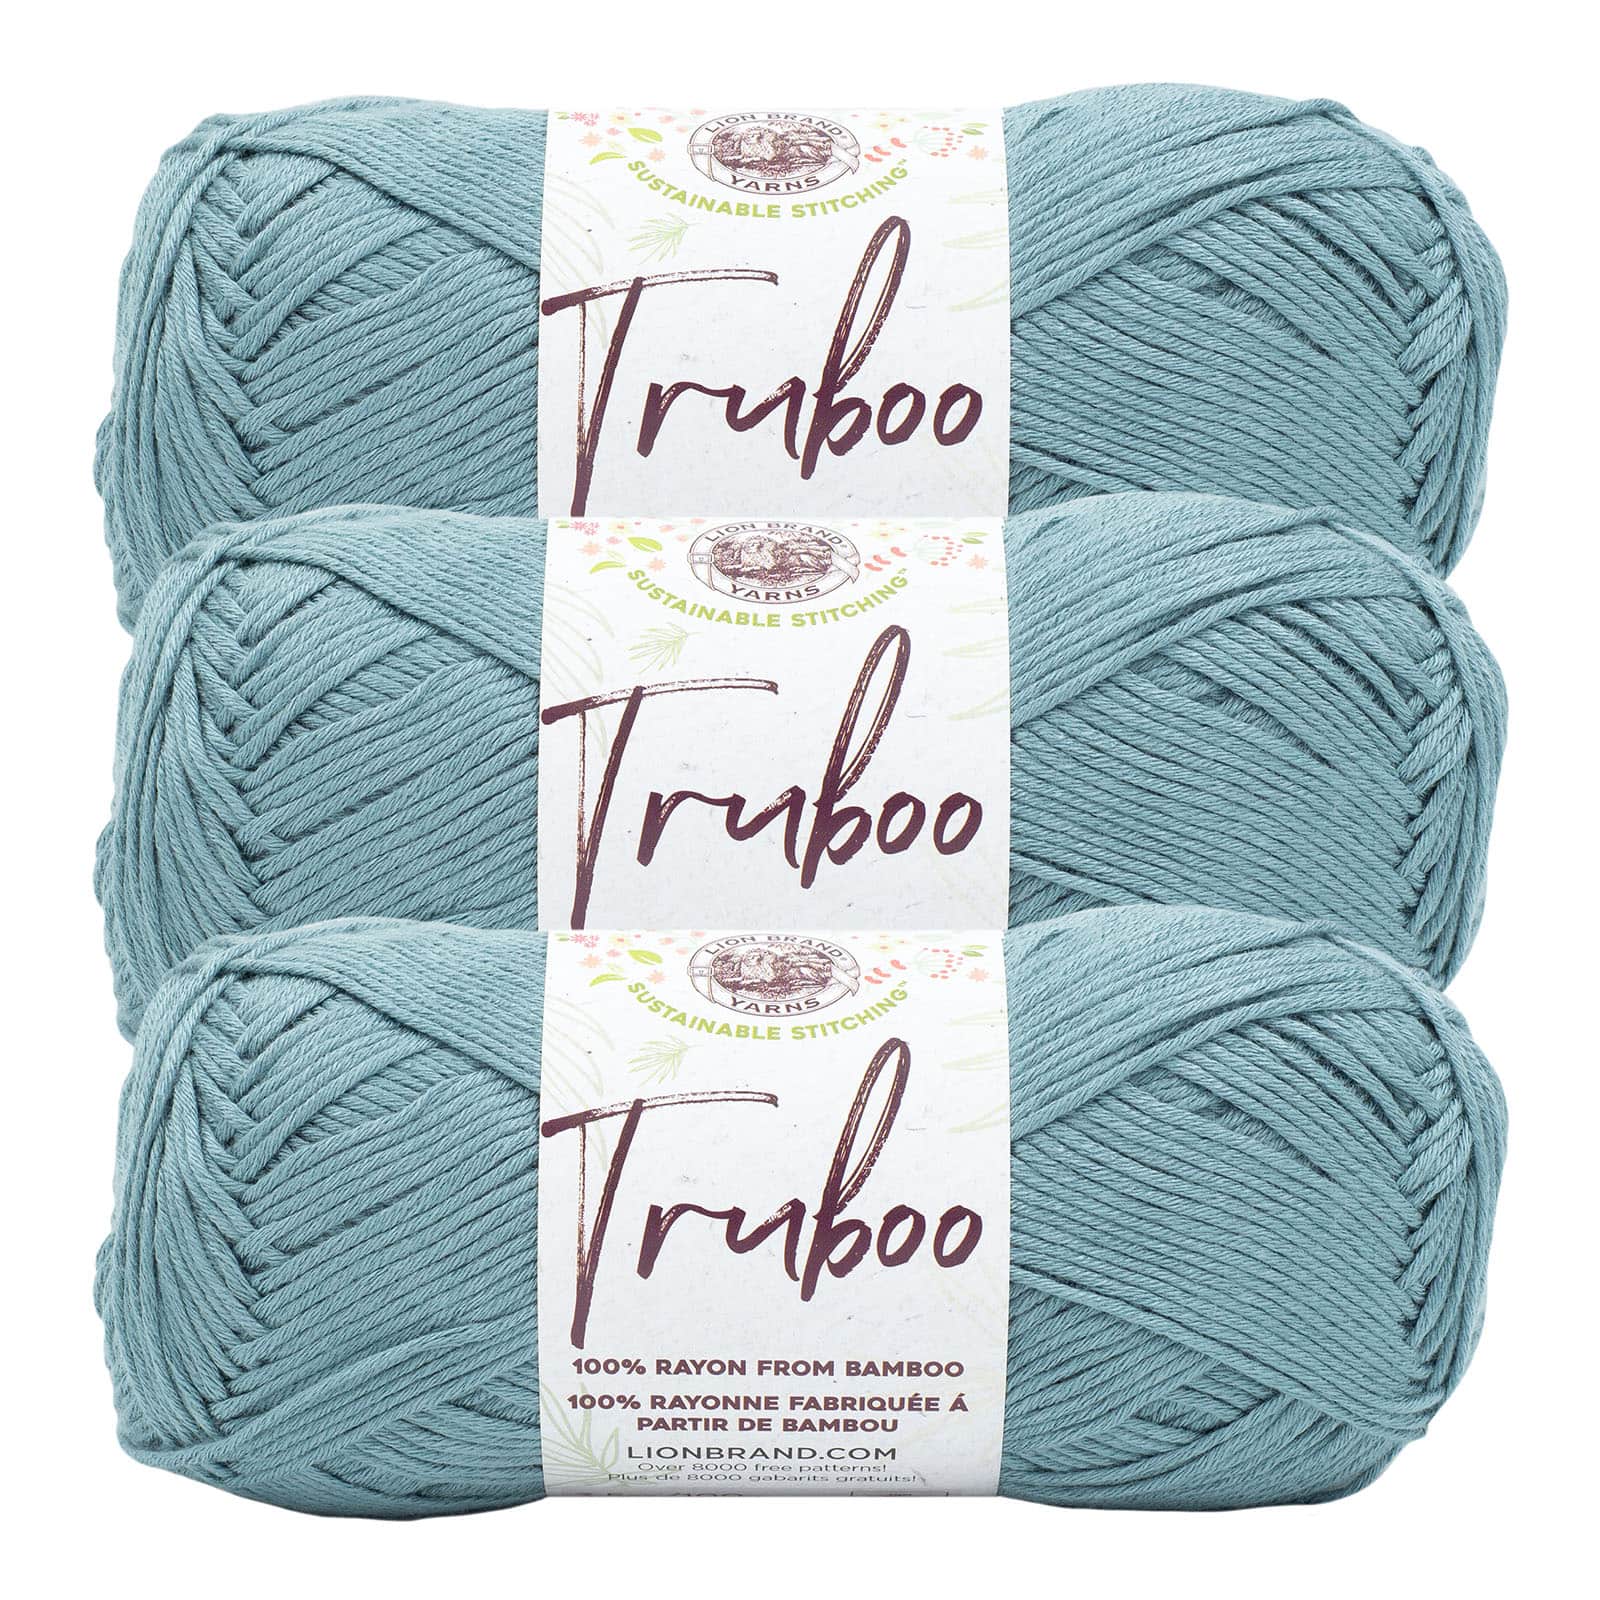  Lion Brand Knitting Yarn Truboo Light Pink 3-Skein